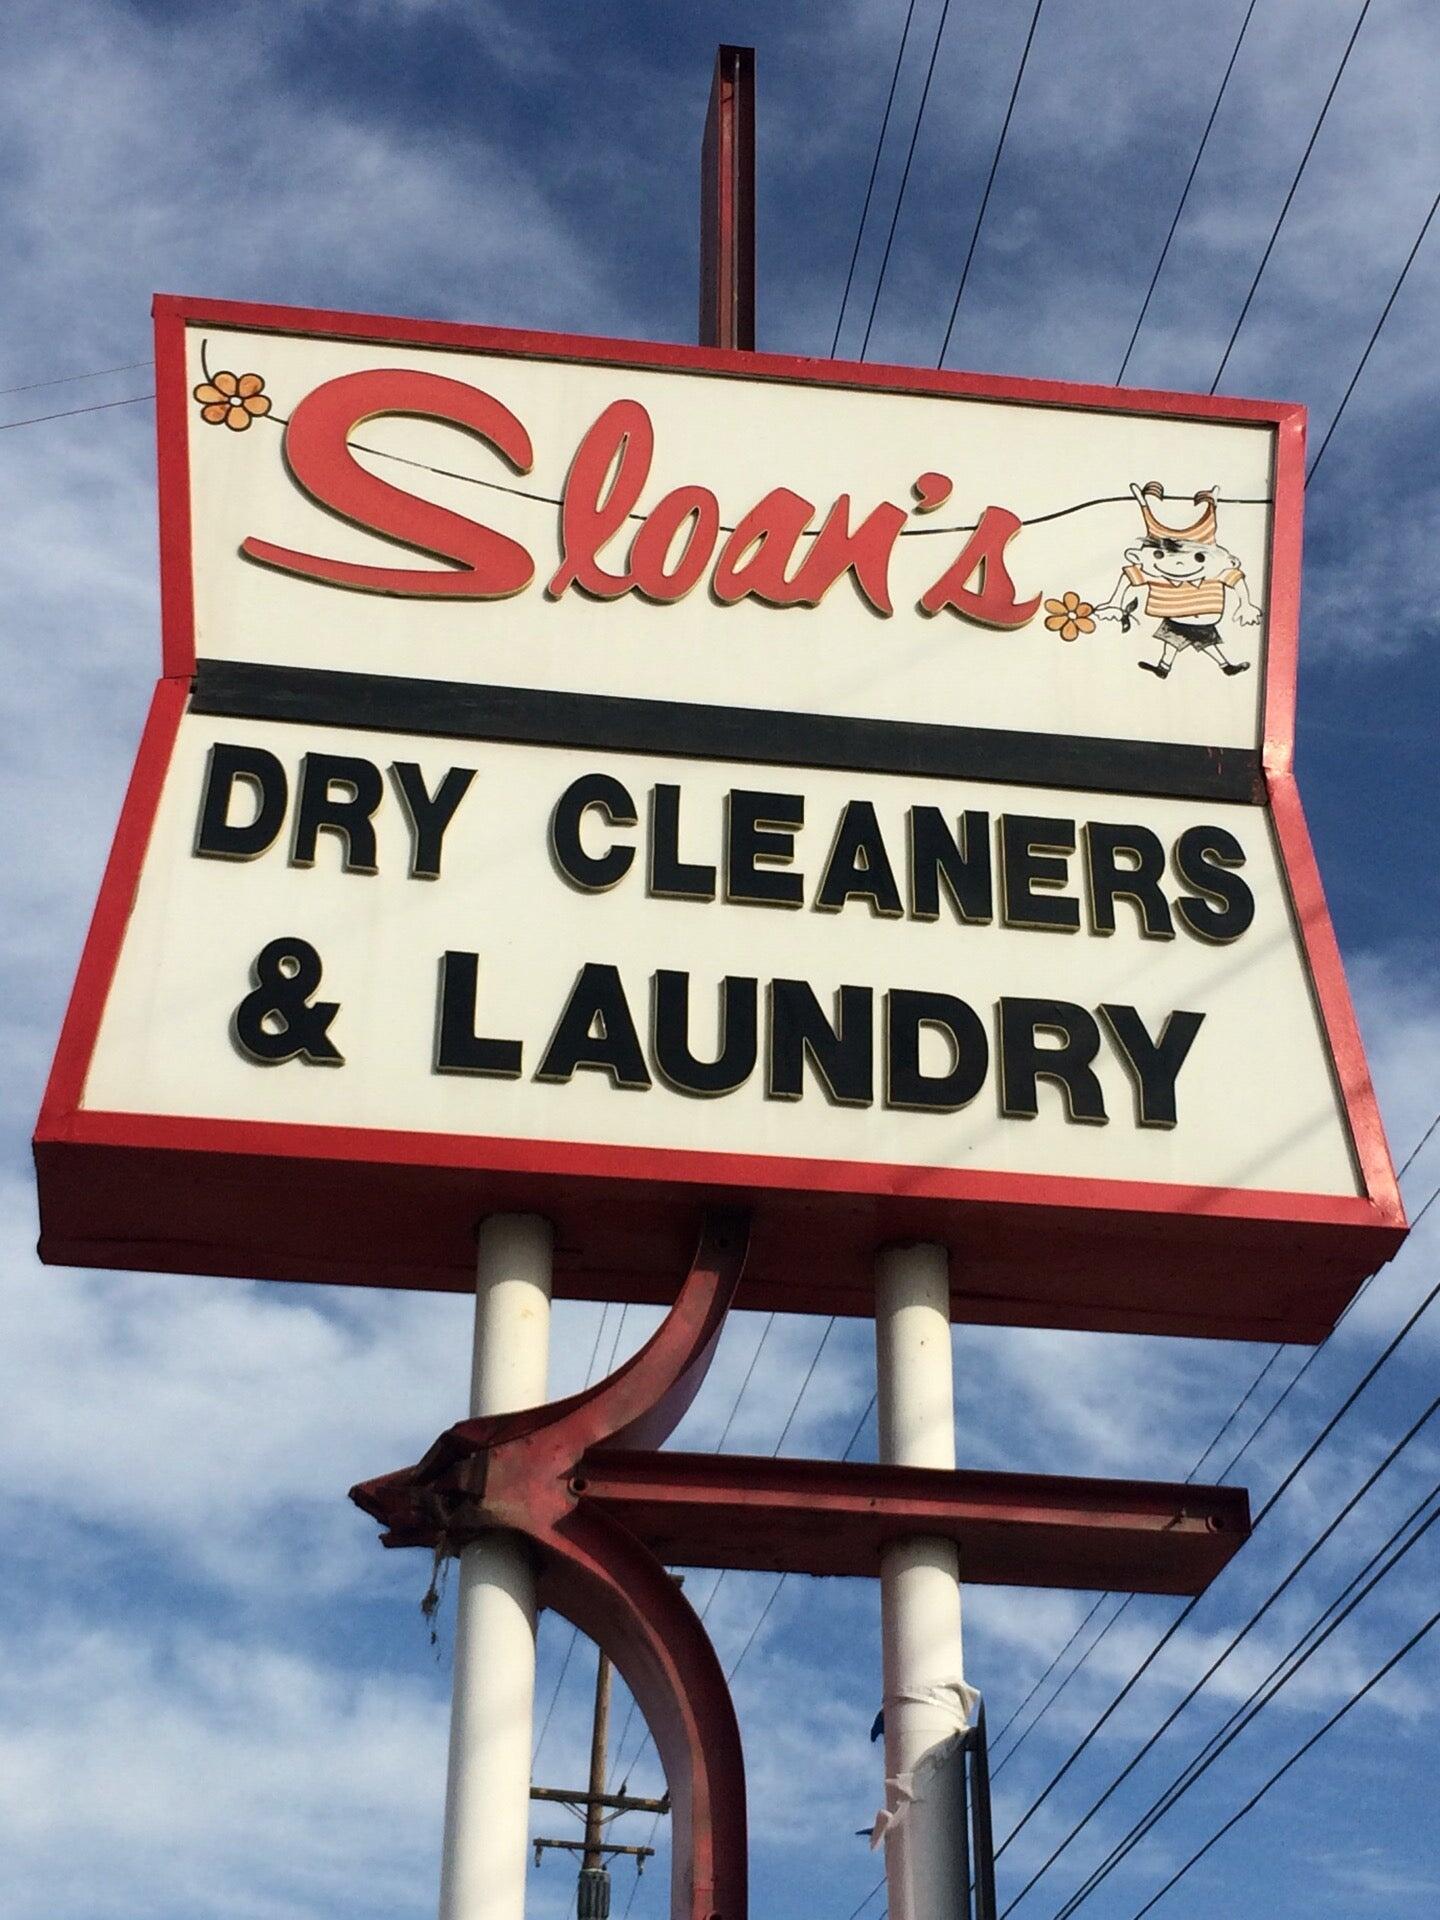 Sloan's Dry Cleaners 5625 Whittier Blvd, Commerce California 90022